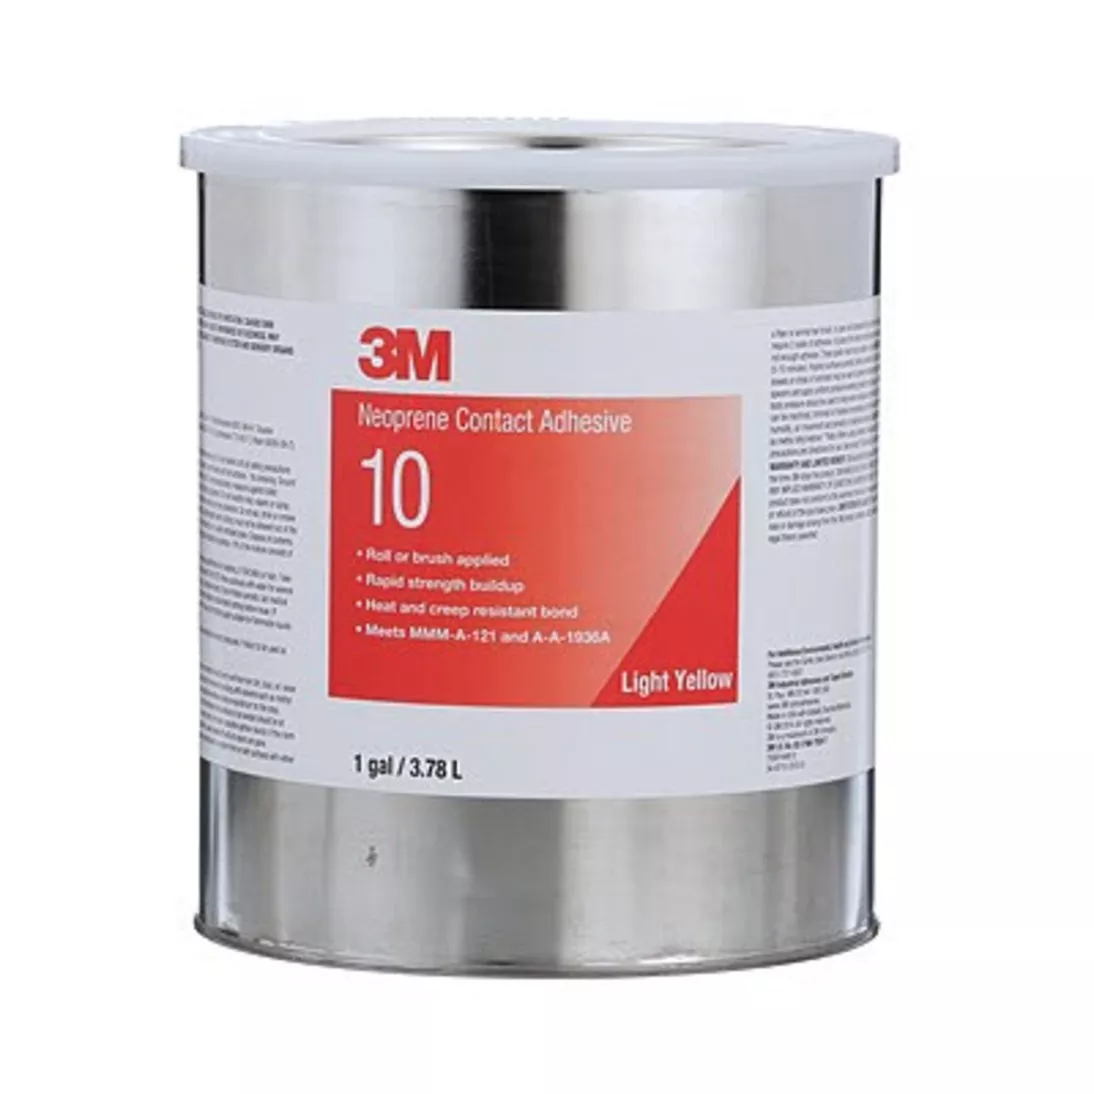 3M™ Neoprene Contact Adhesive 10, Light Yellow, 1 Gallon Can, 4/case